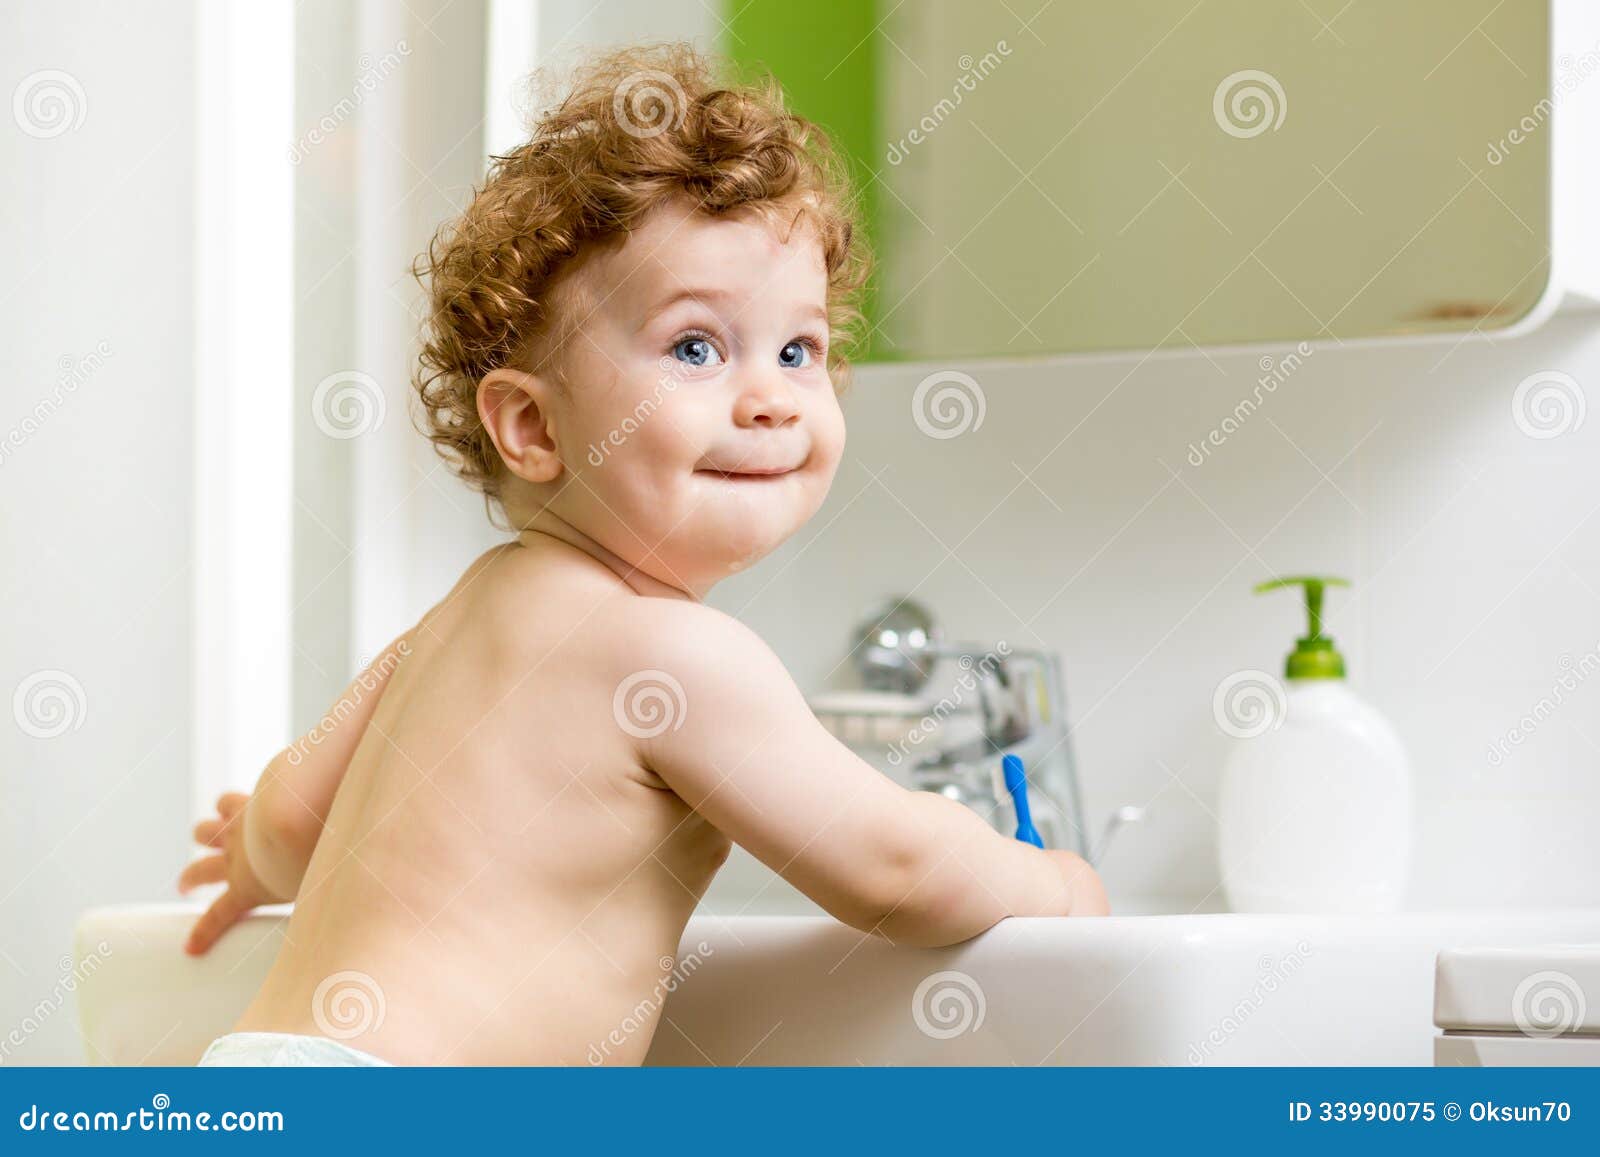 baby brushing teeth in bathroom